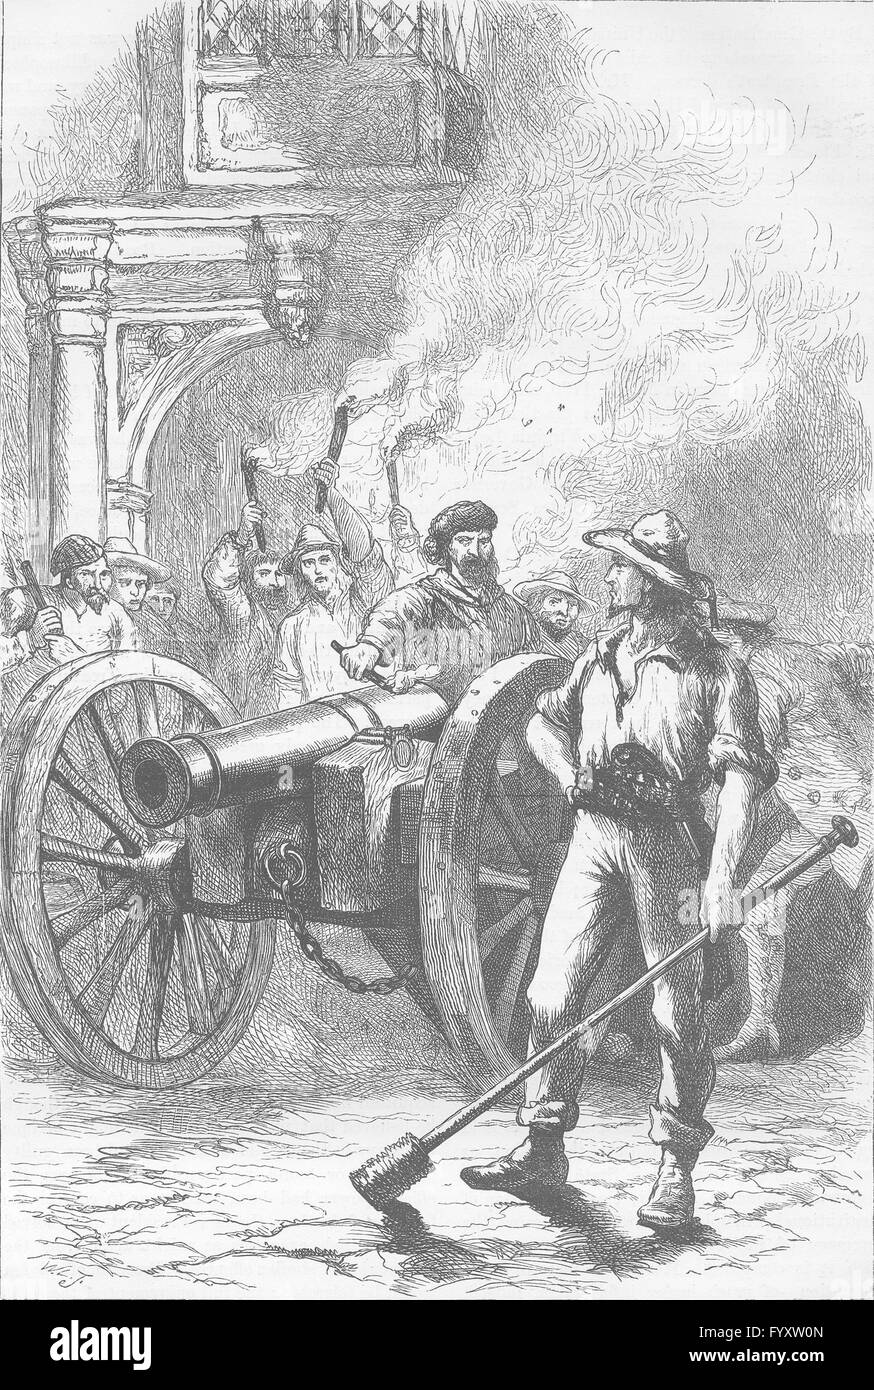 USA: Mob, cannon, courthouse, M'Leod imprisoned, antique print c1880 Stock Photo